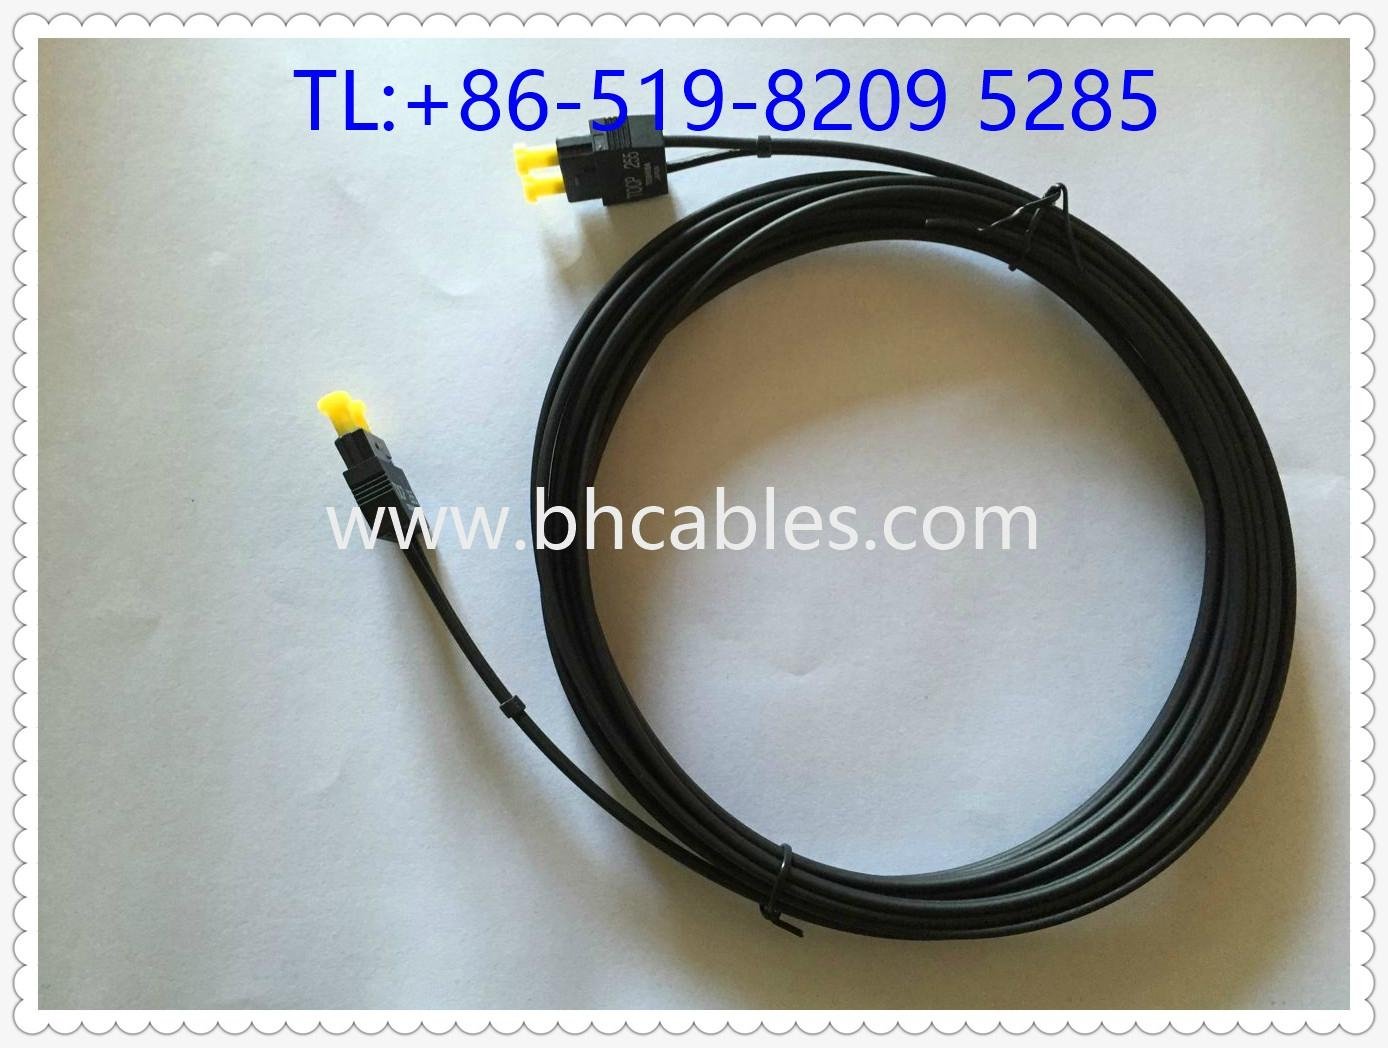 TOCP 255 Toshiba Fiber Optical Cable 5